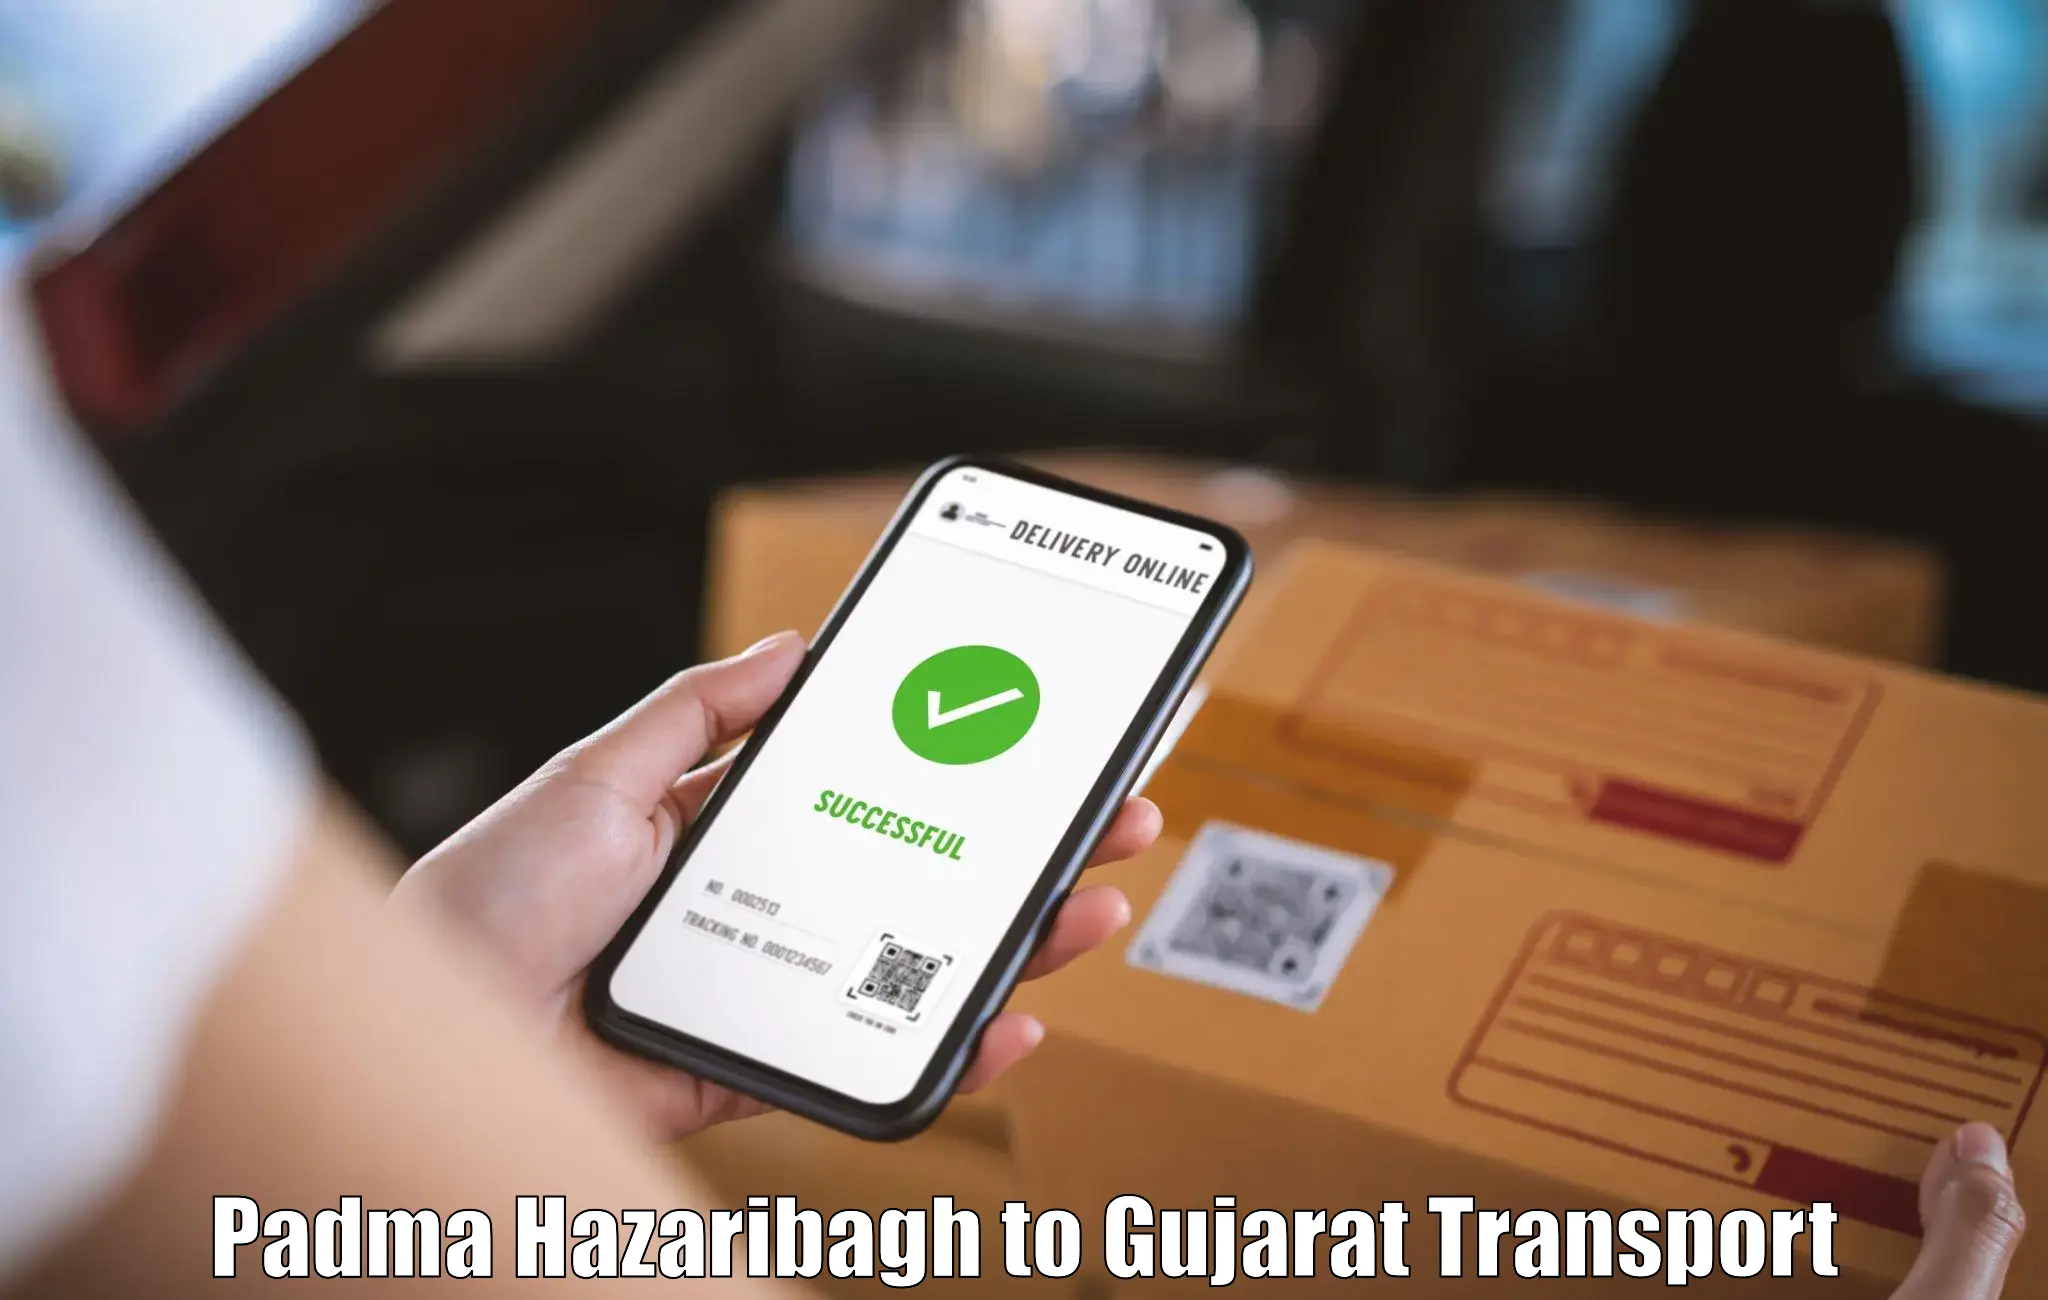 Shipping partner Padma Hazaribagh to Gujarat